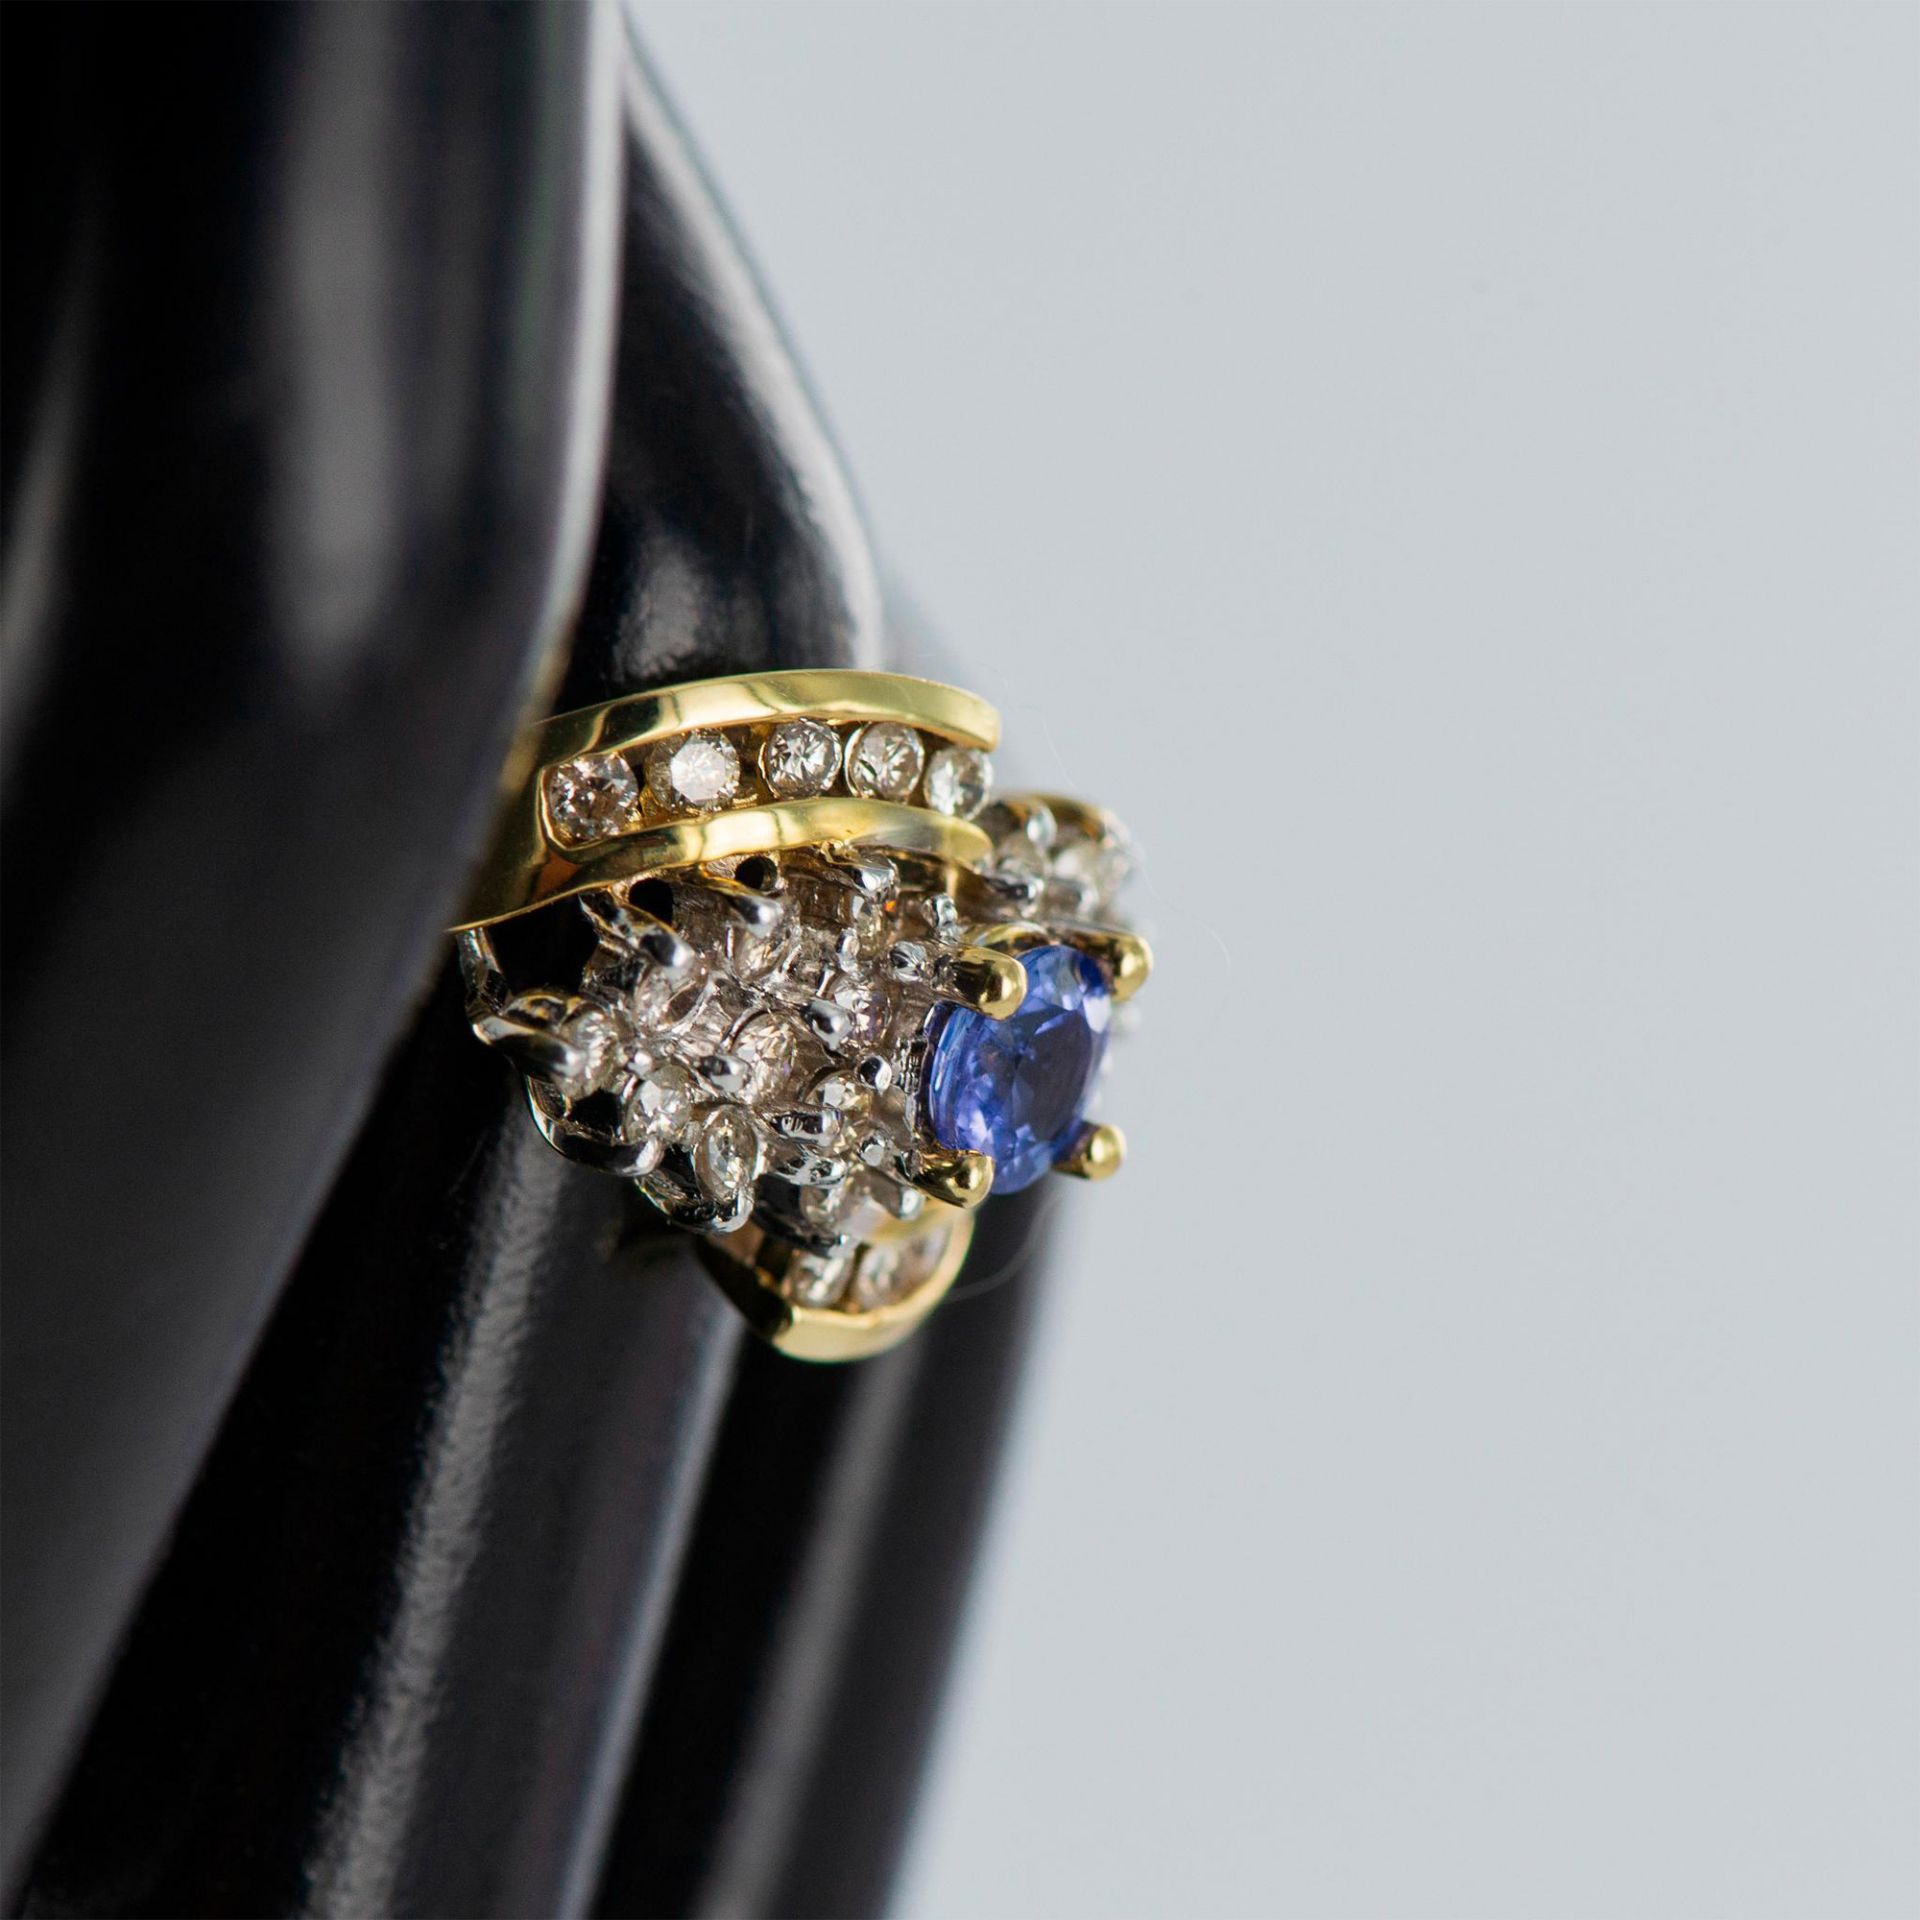 Stunning LeVian 14K Yellow Gold, Diamond, and Amethyst Ring - Image 10 of 10